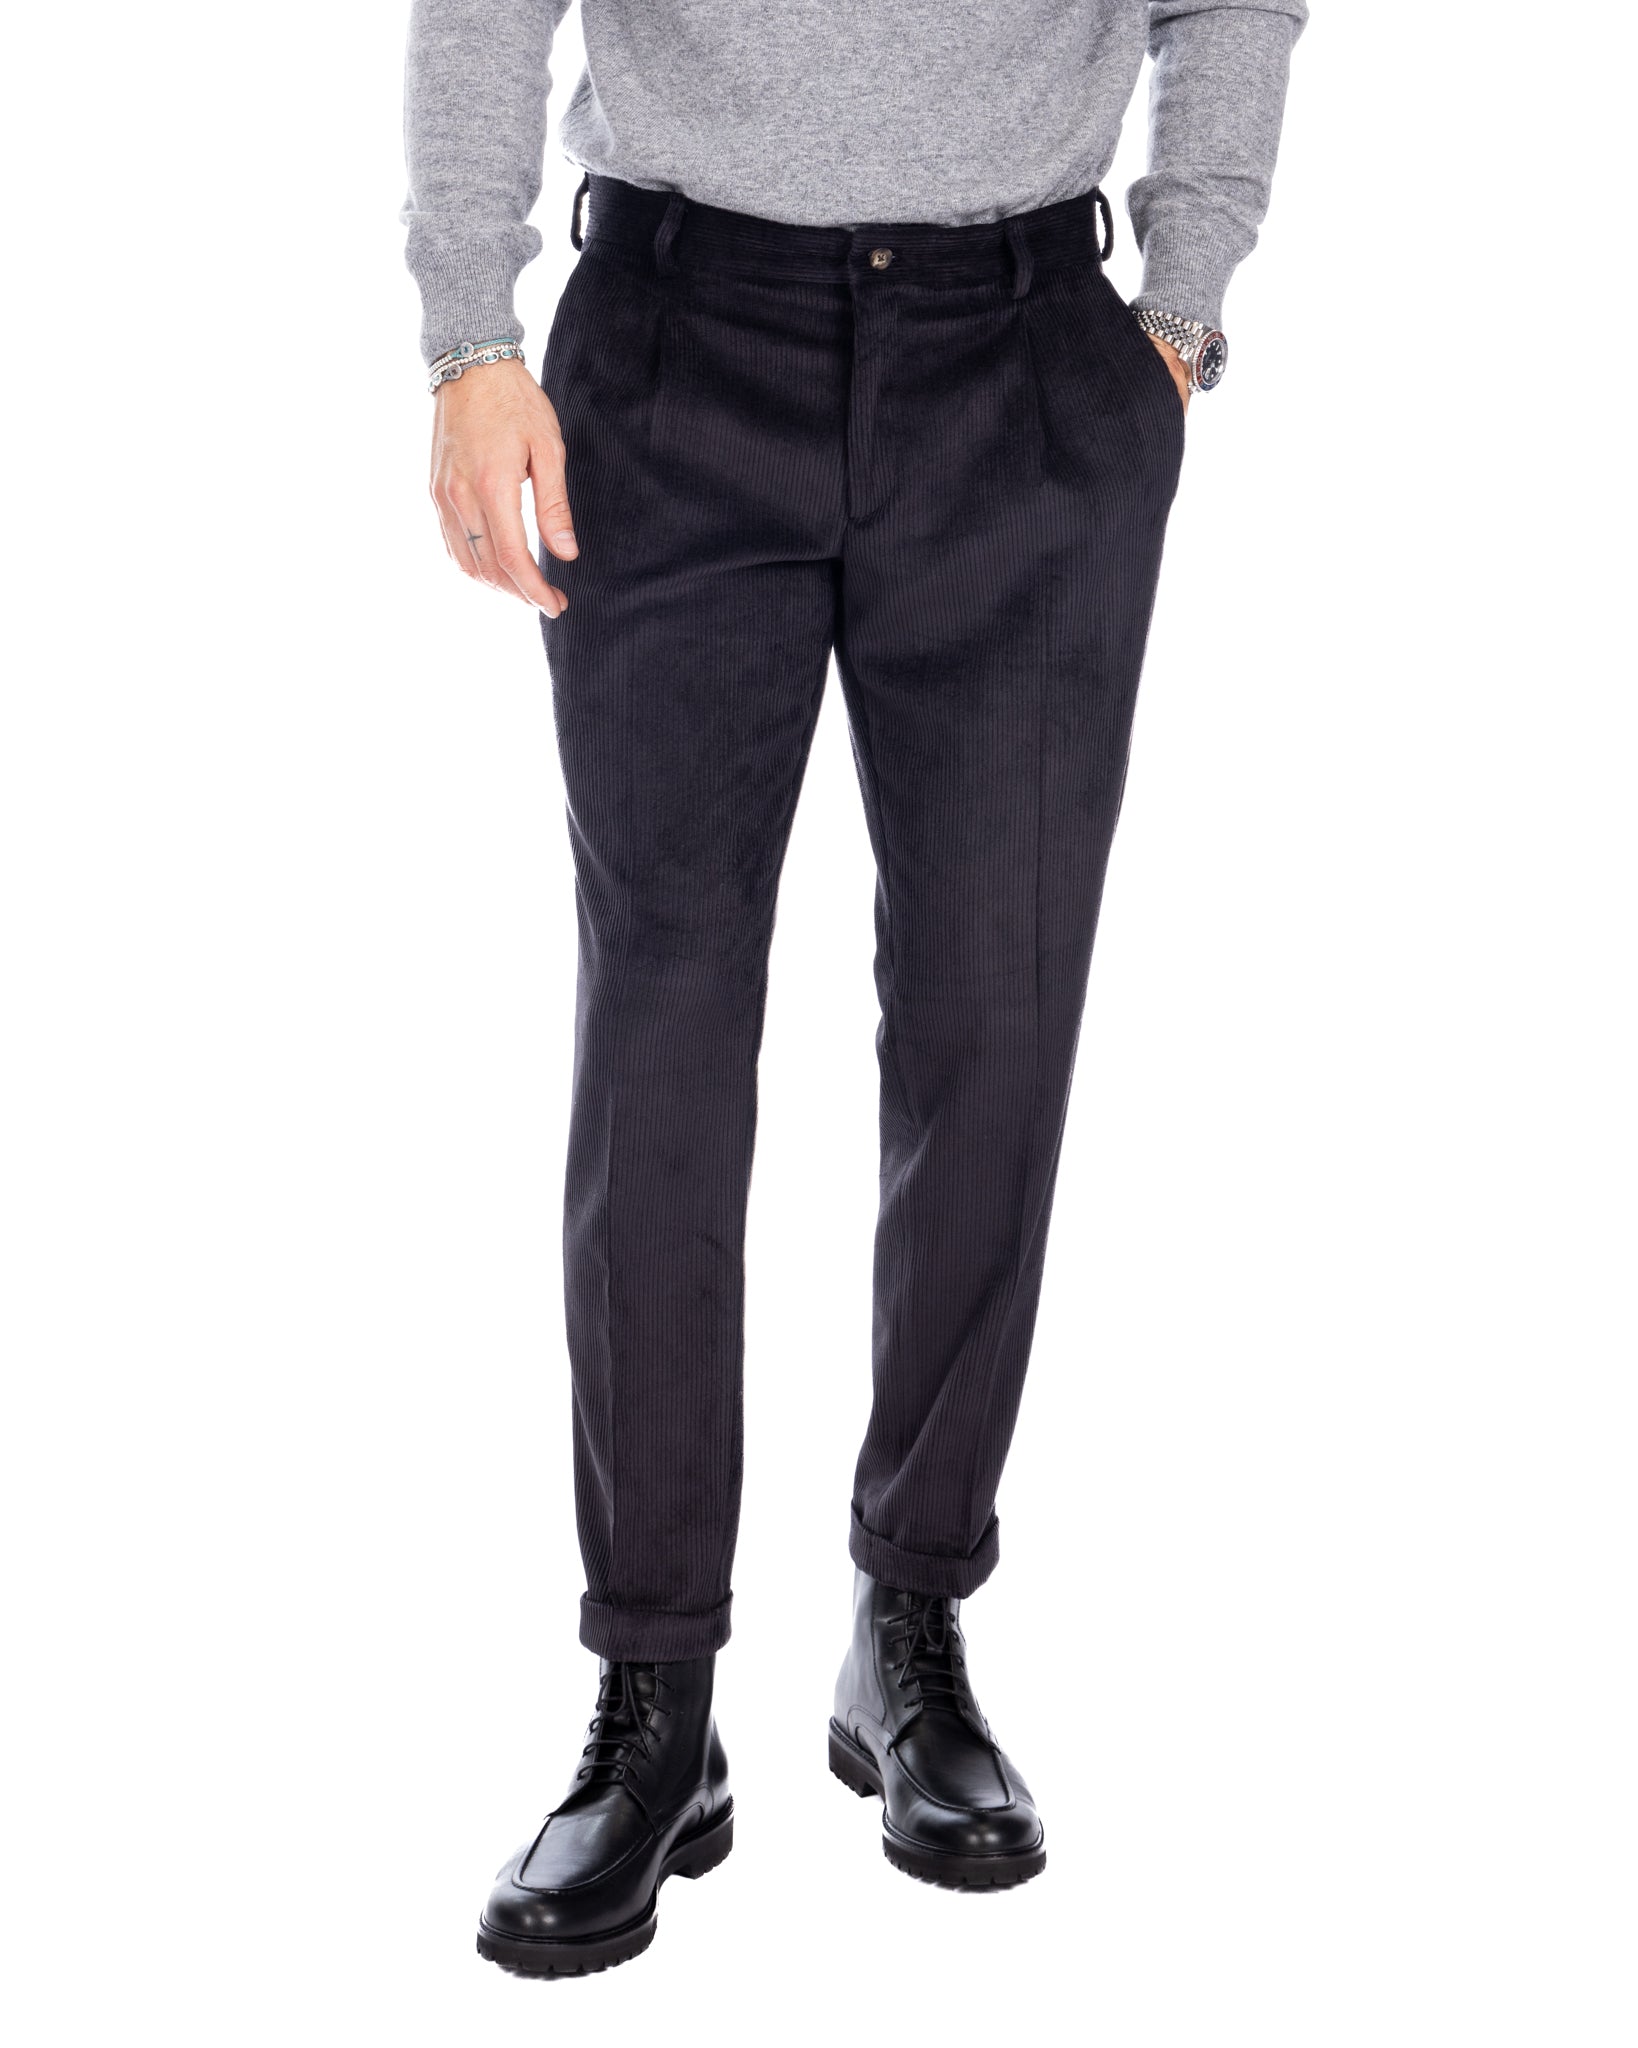 Lodi - black trousers with velvet pleats 